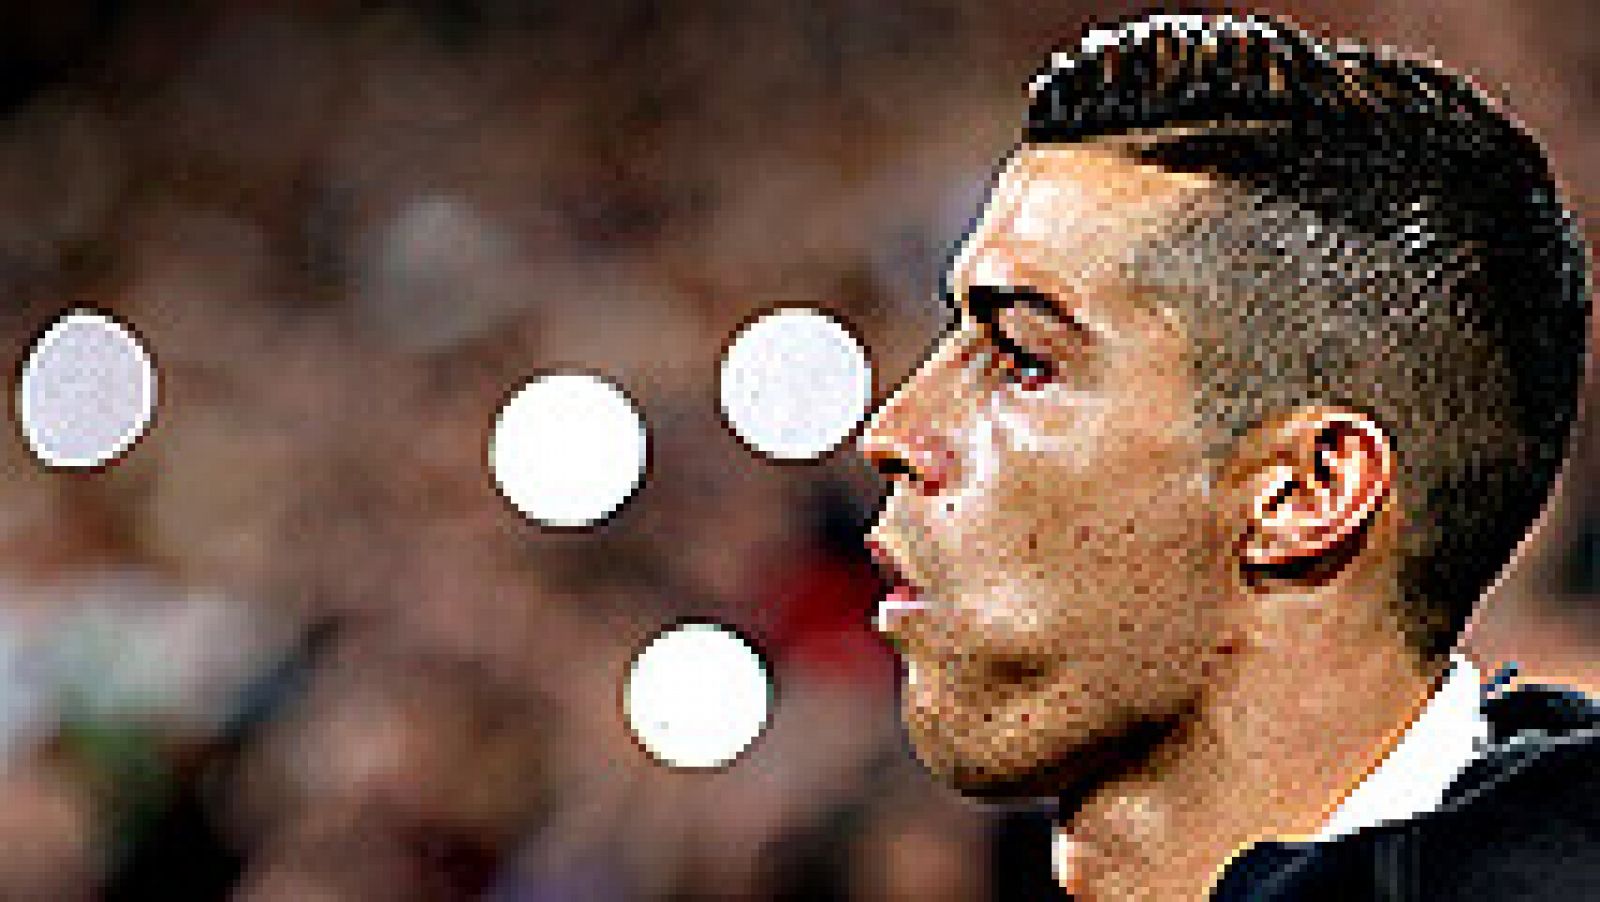 Telediario 1: Cristiano Ronaldo: "Quien no debe, no teme" | RTVE Play